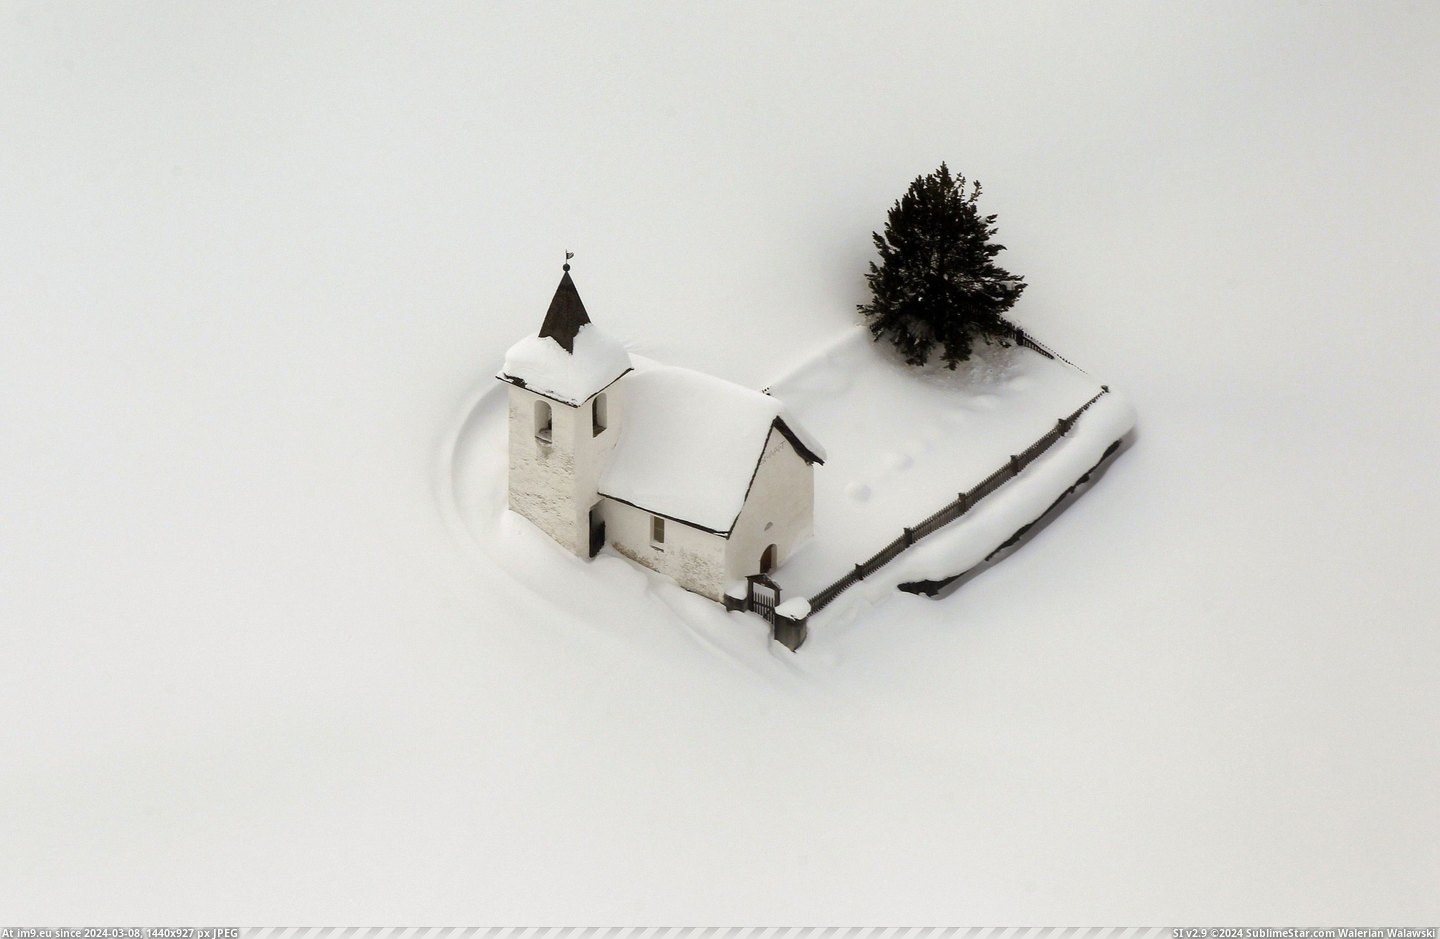 #Snow #Church #Jenisberg #Switzerland #Surrounded [Pics] A little church in Jenisberg, Switzerland, surrounded by snow. Pic. (Bild von album My r/PICS favs))